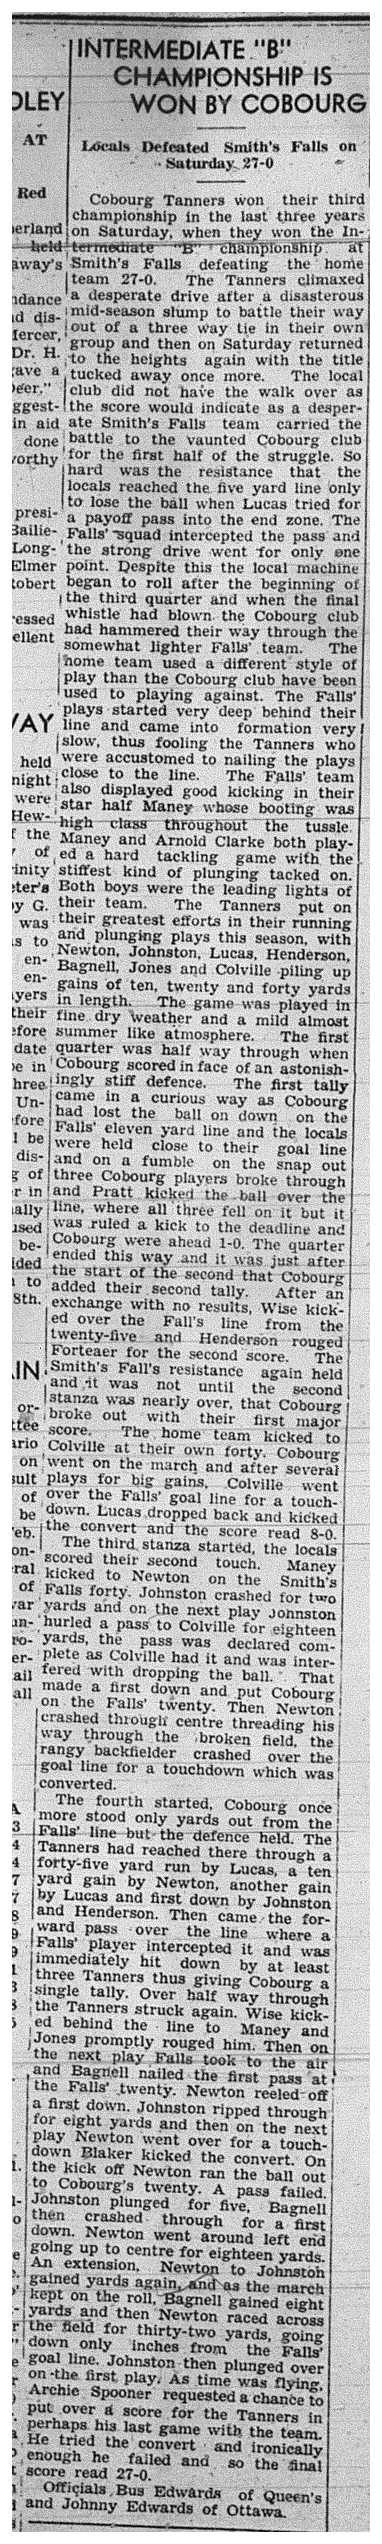 1939-12-07 Football -Cobourg Tanners win Intermediate B Championship vs Smiths Falls